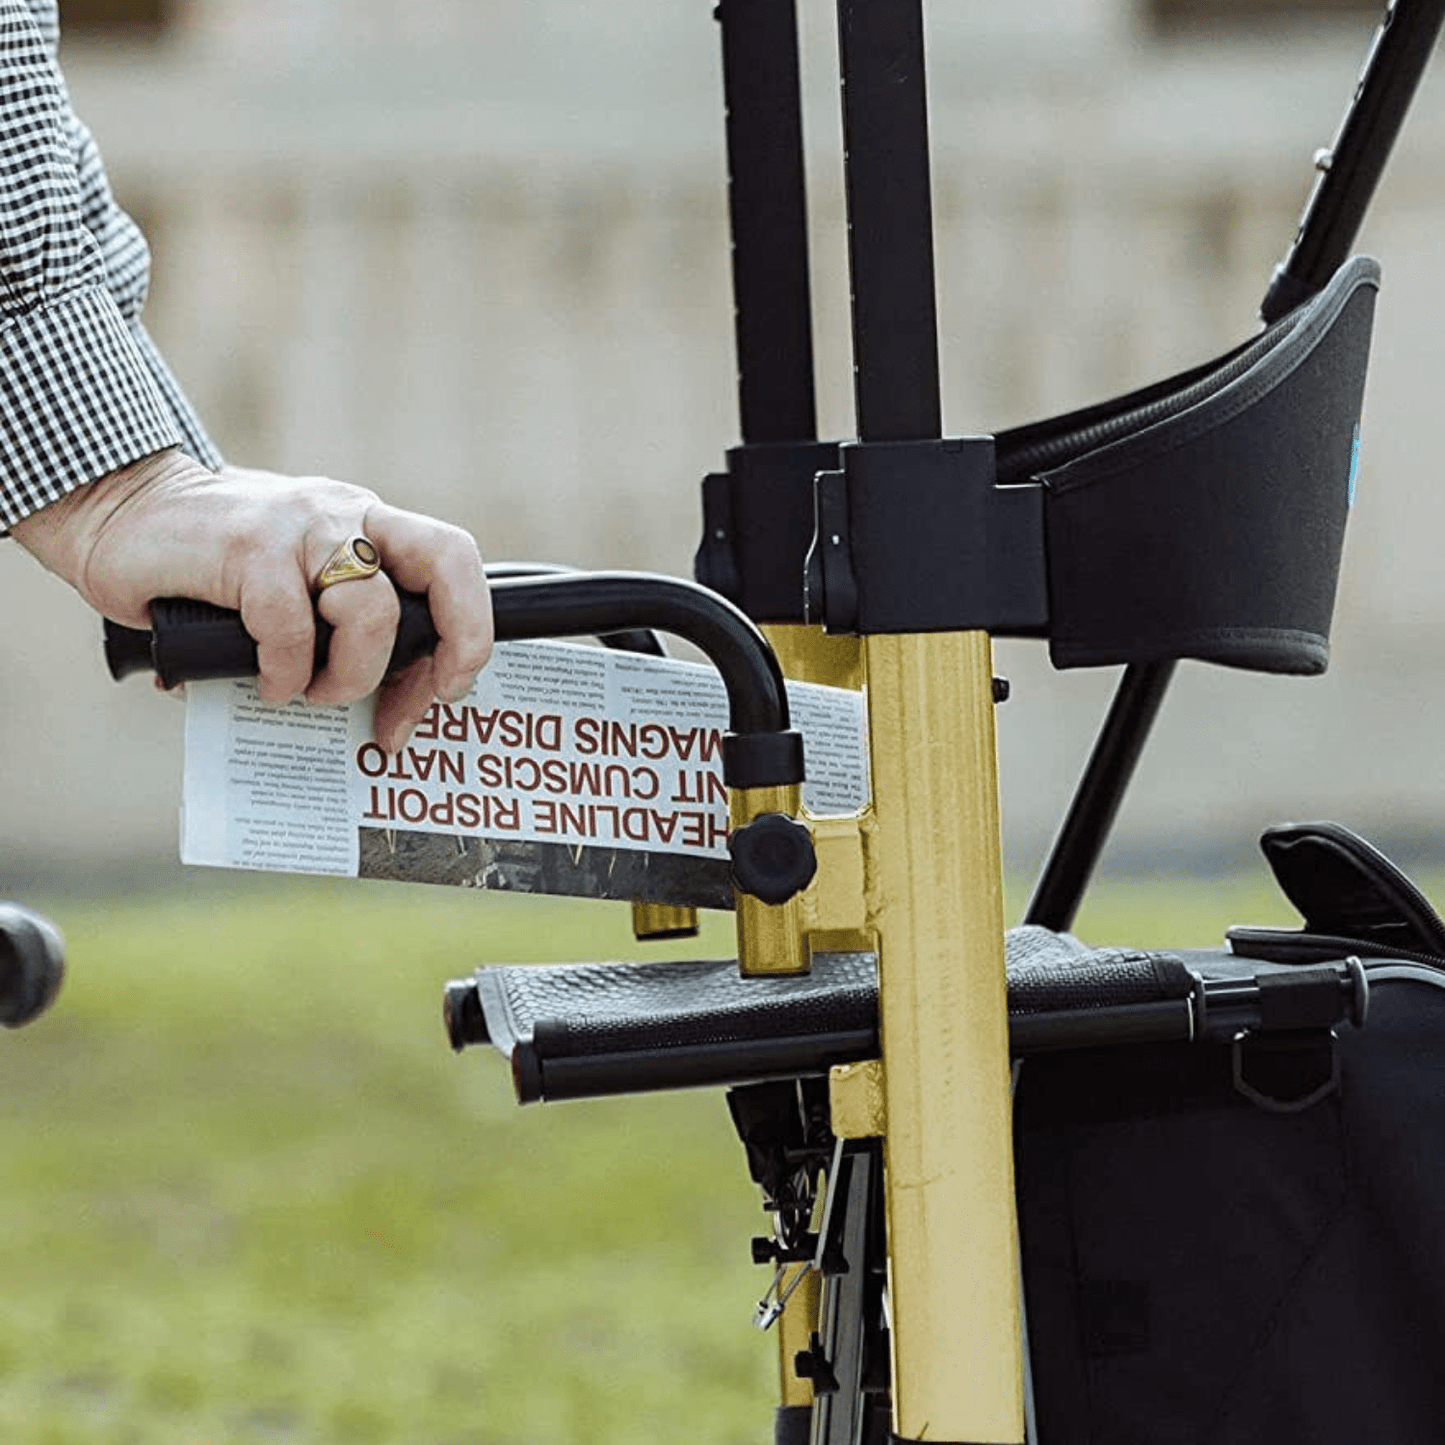 Heavy Duty Elderly Stand Upright Rollator Walker With Seat - Merchandise Plug